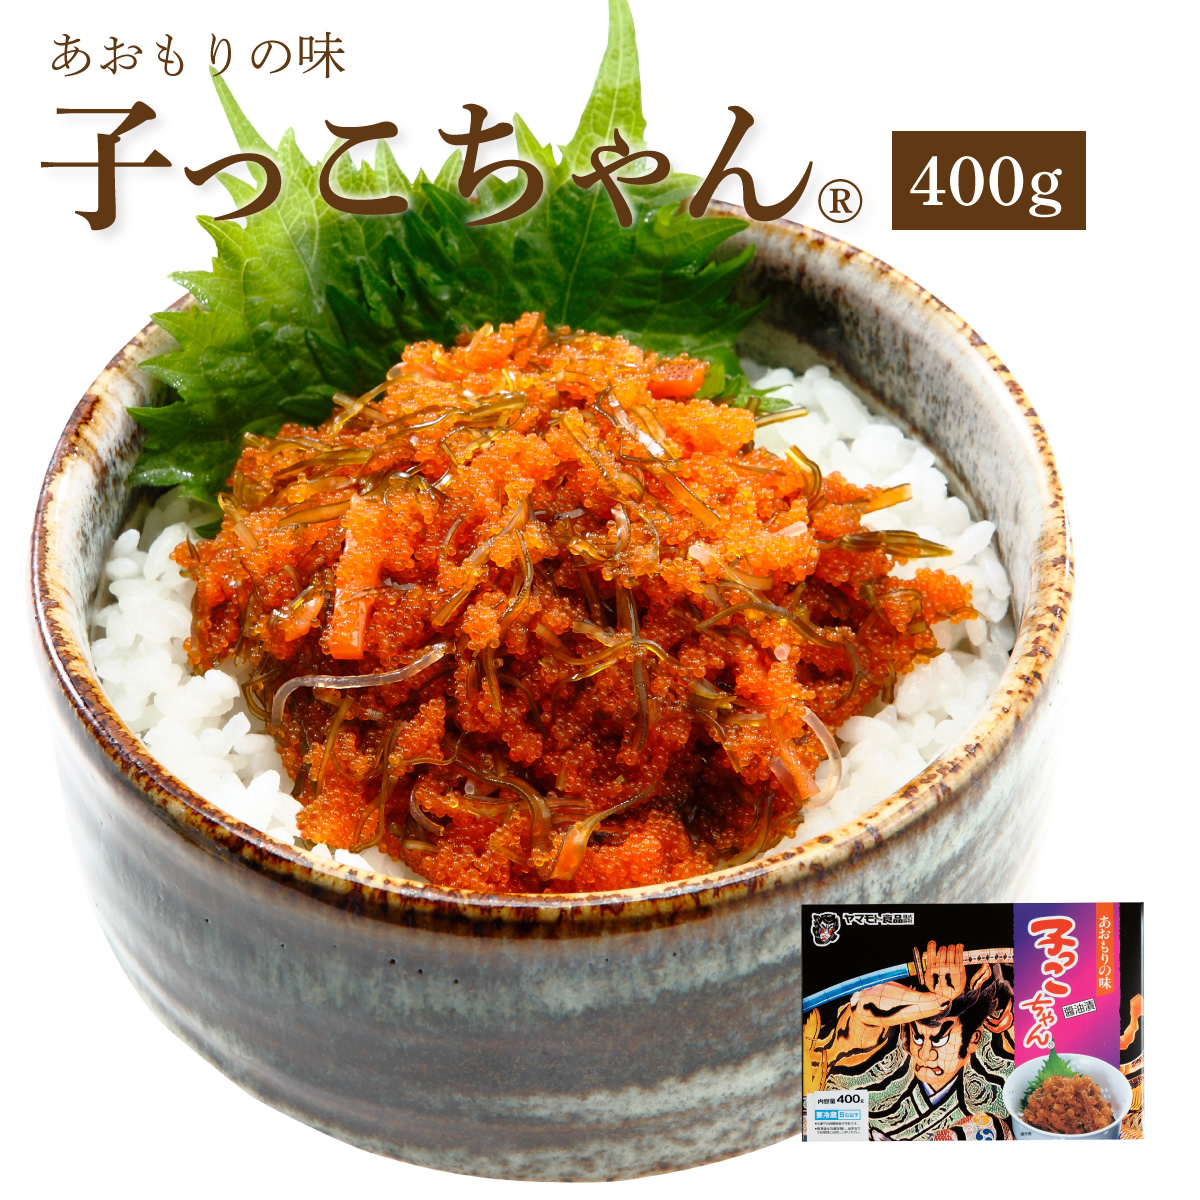 ... Chan 400g Aomori . земля производство рука земля производство рис. .. популярный прекрасный тест .. ваш заказ гурман солености tsukemono sake. . закуска Tohoku 